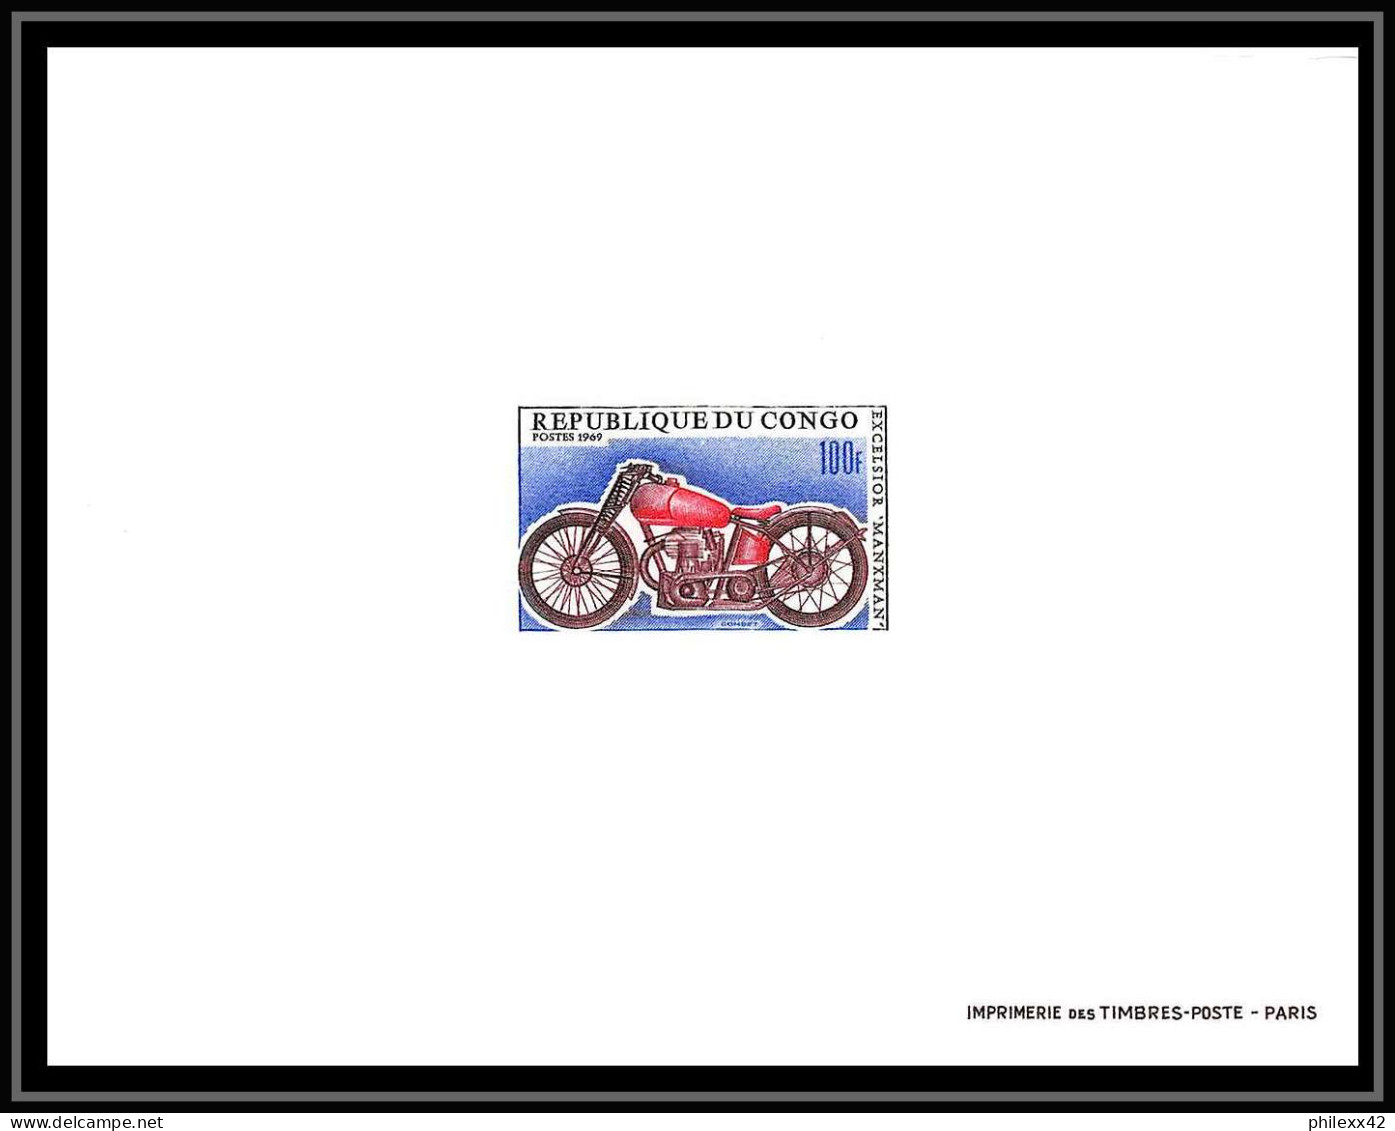 0610 Epreuve de luxe deluxe proof congo N°229/236 cycle velo (Cycling) moto complet tb Scott Nos 183-90